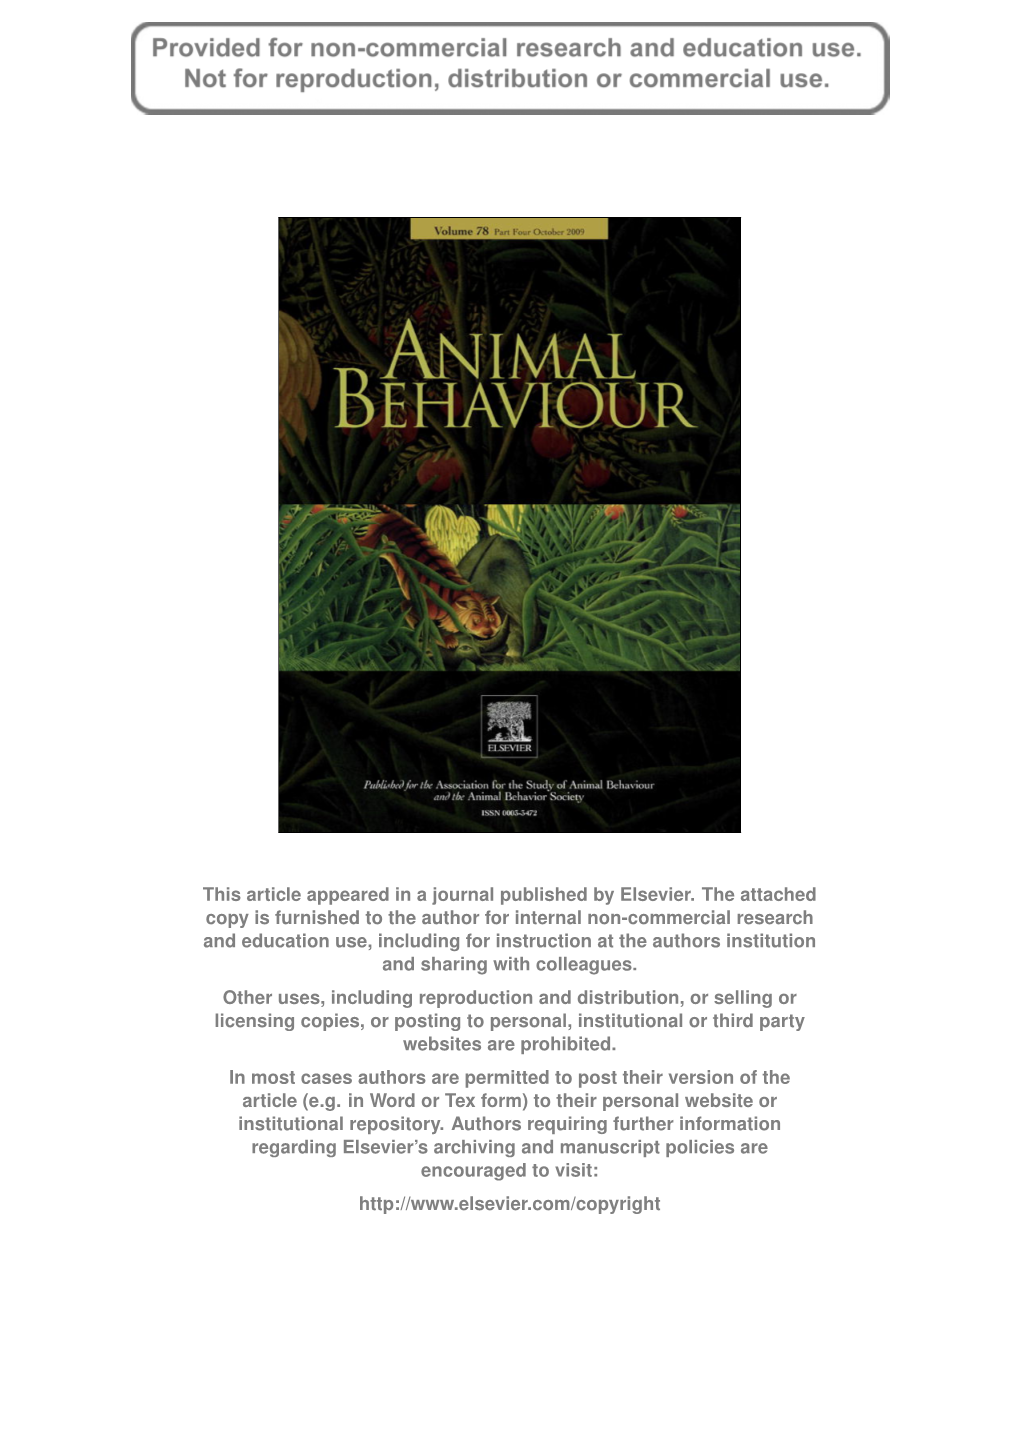 Animal Behaviour, 78, 1001-1010